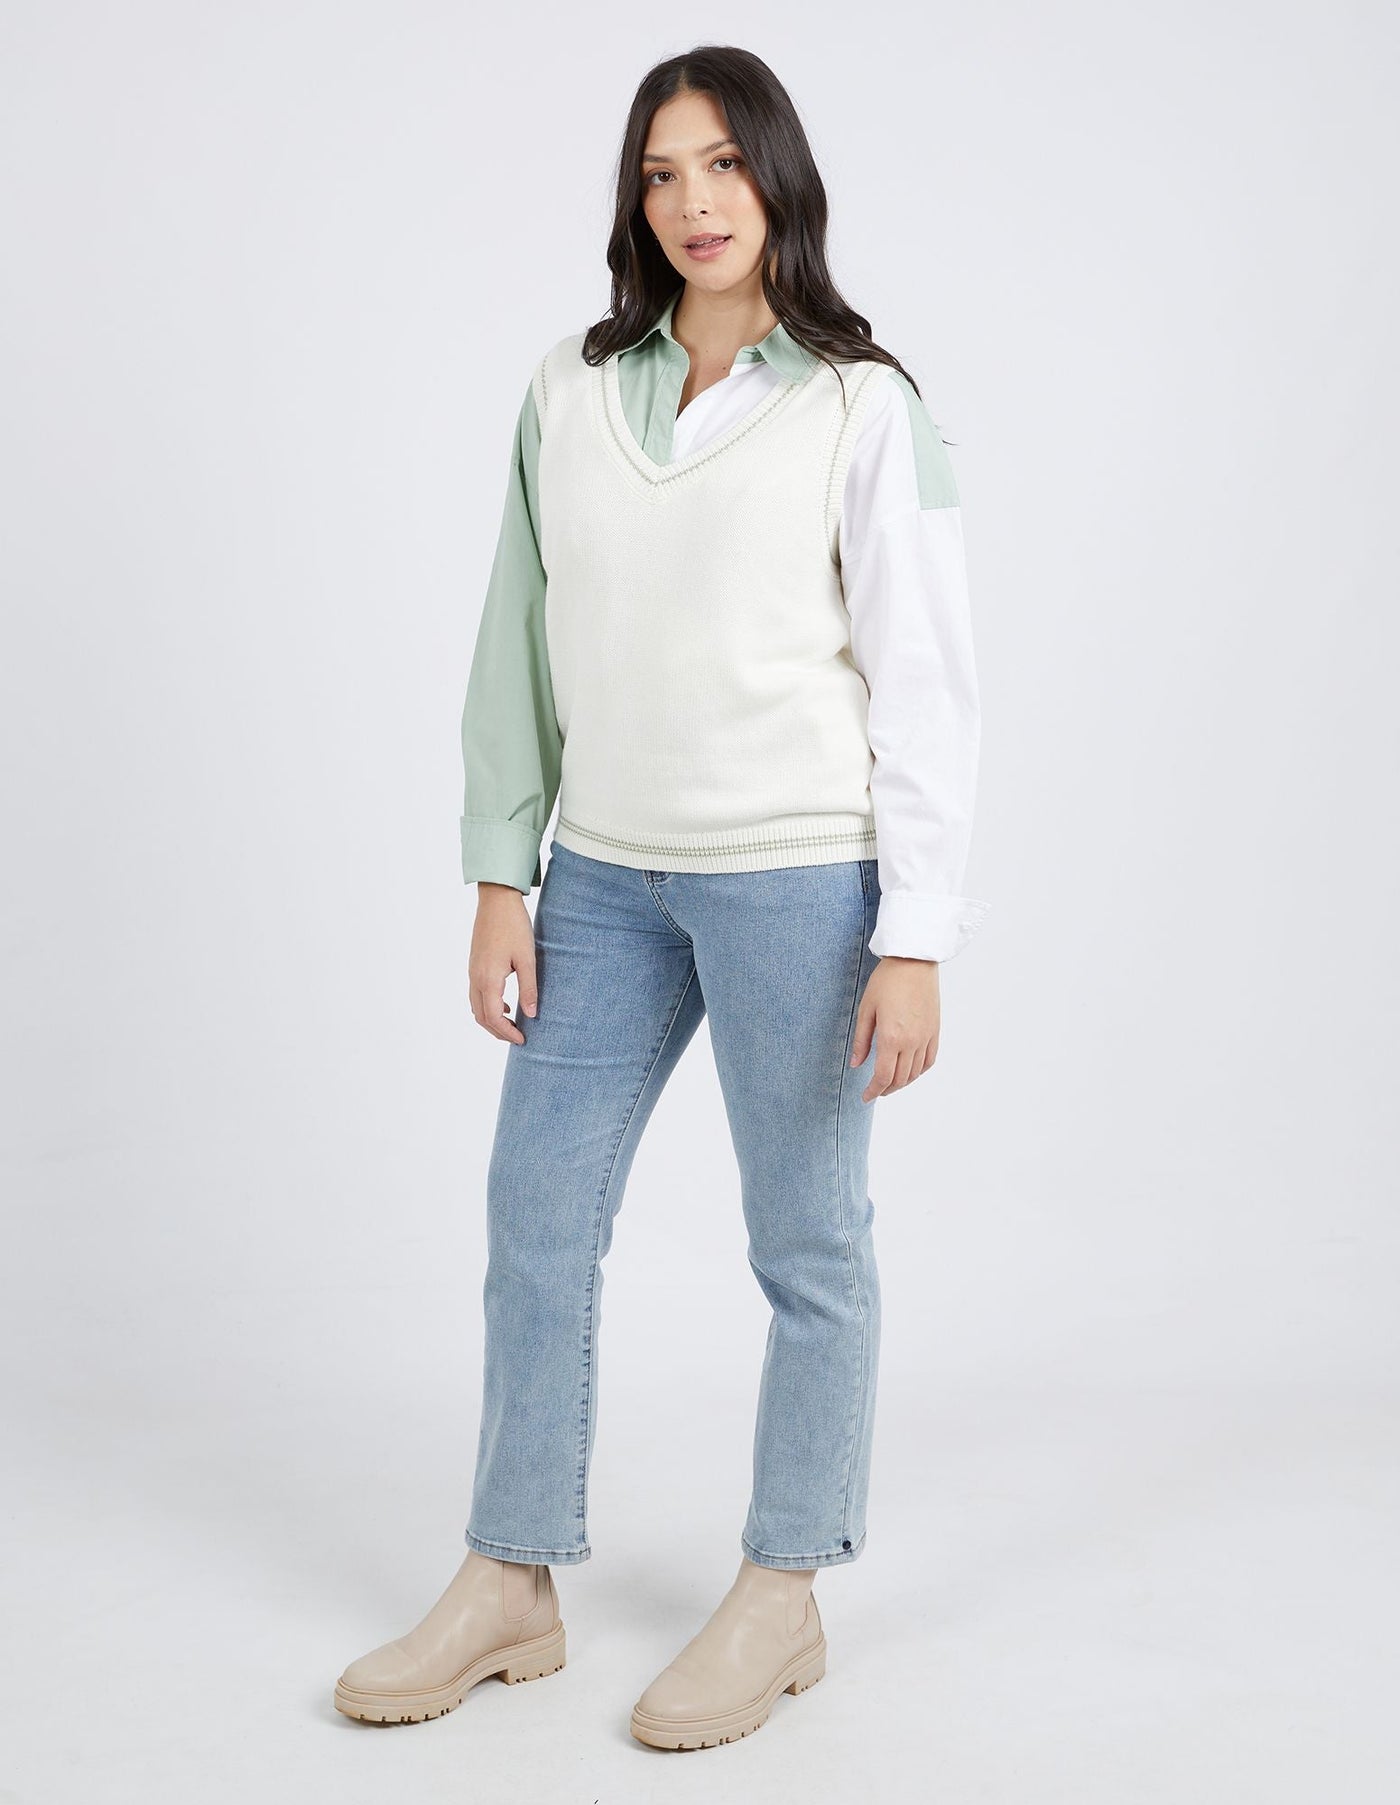 Carina Knit Vest - Vintage White-Elm Lifestyle-Lima & Co